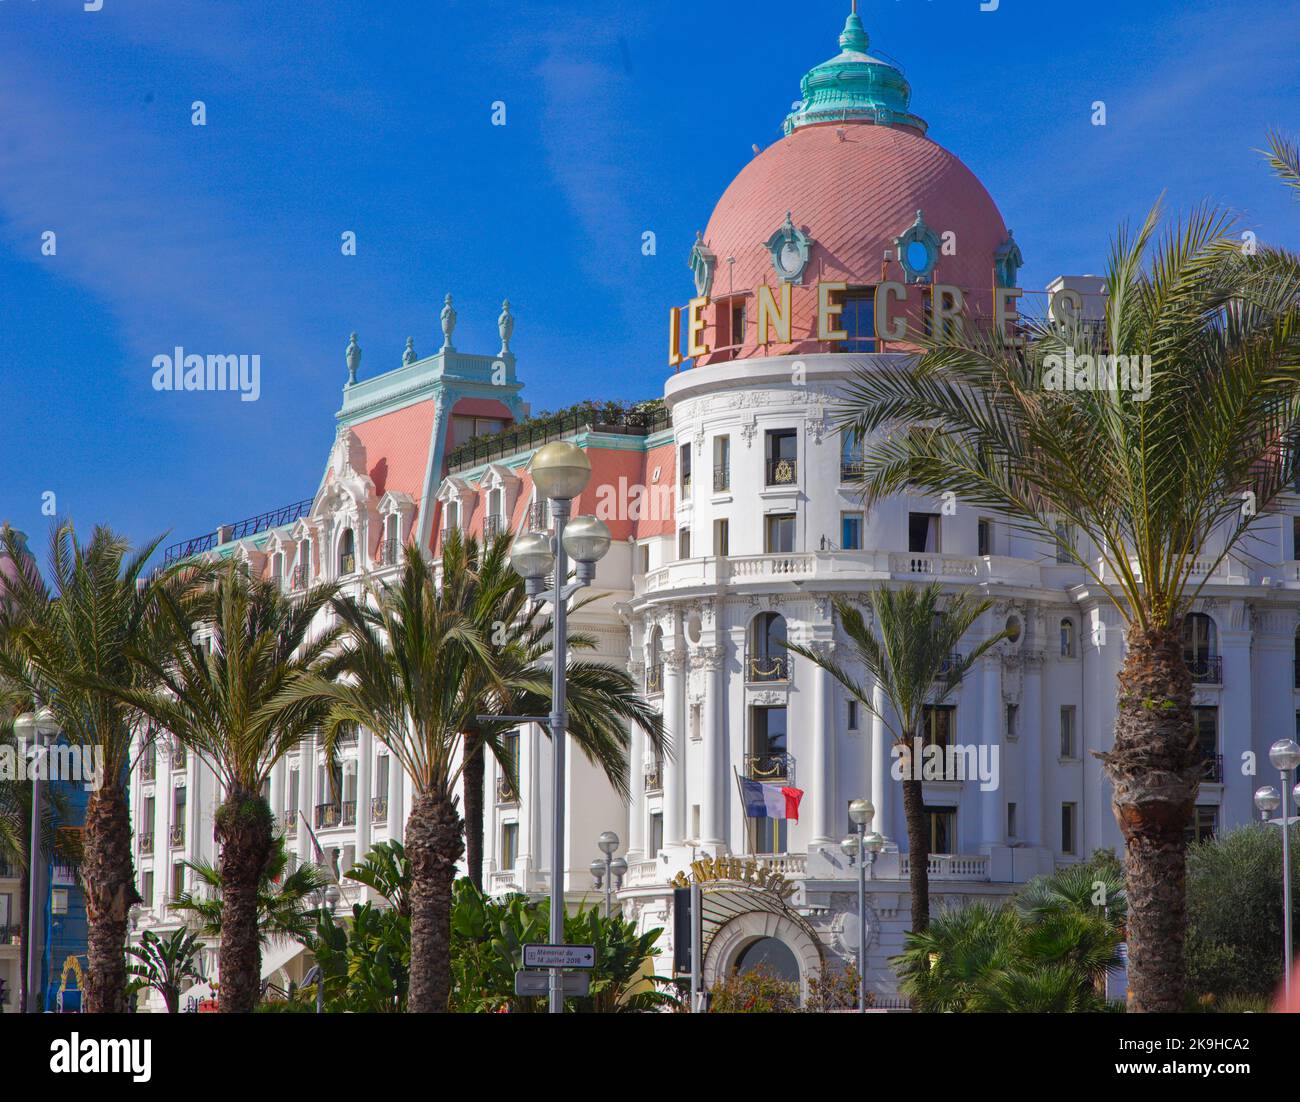 France, Cote d'Azur, Nice, Le Negresco, hotel, Stock Photo